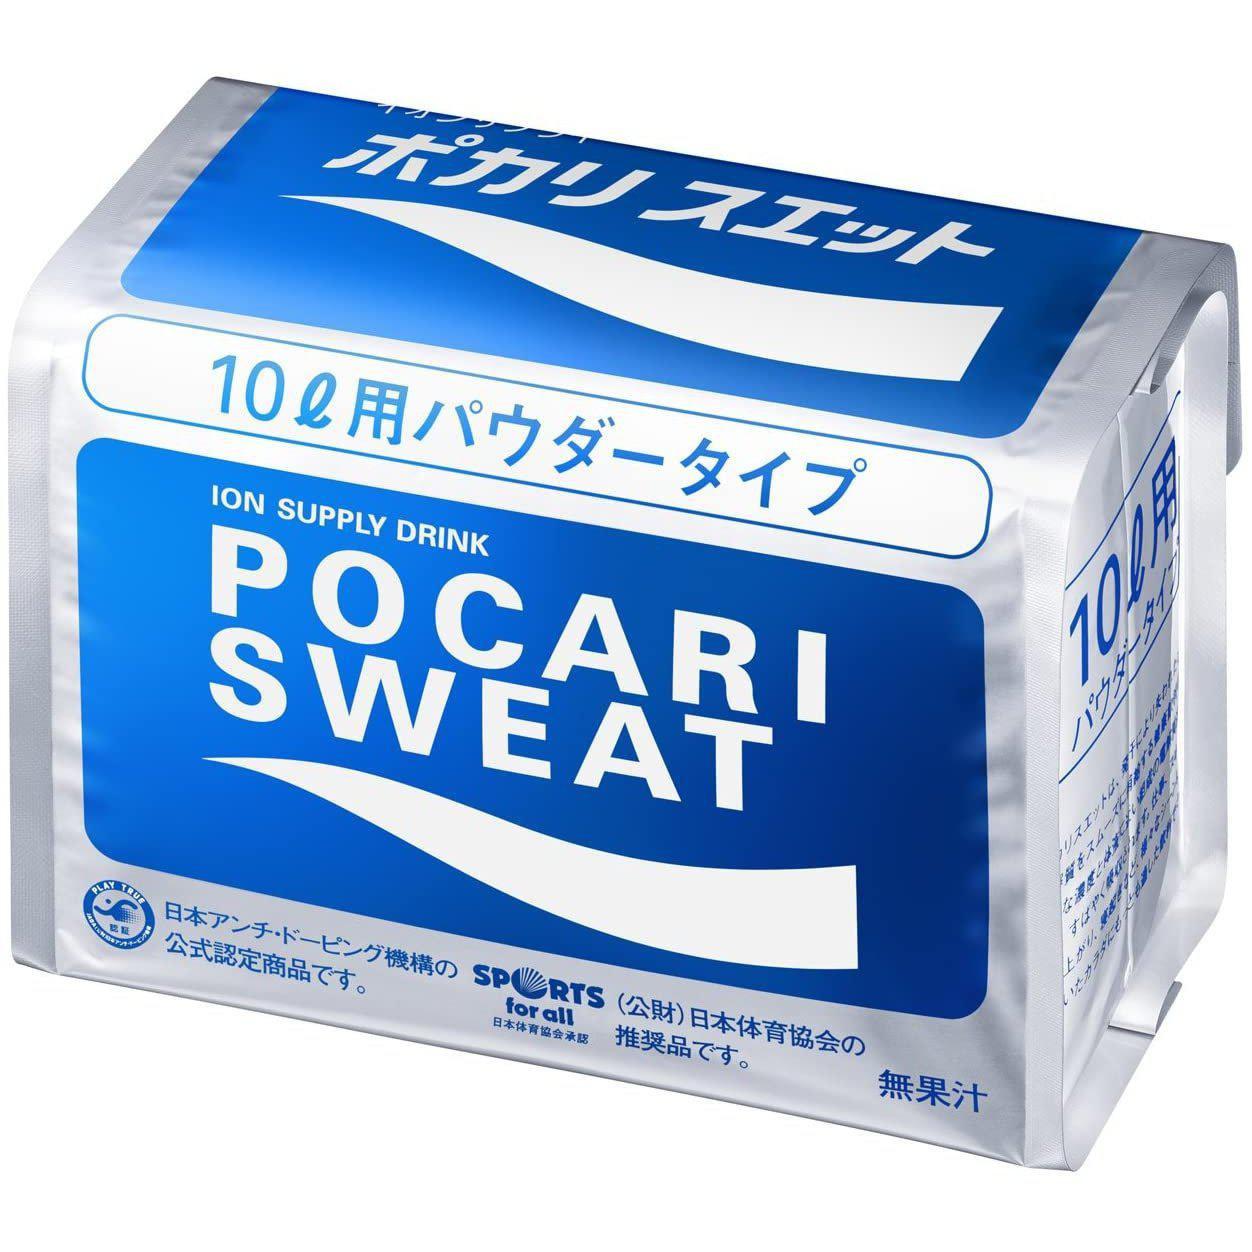 P-1-OTK-POC-PW-740-Otsuka Pocari Sweat Powder Ion Supply Energy Drink 740g for 10L.jpg